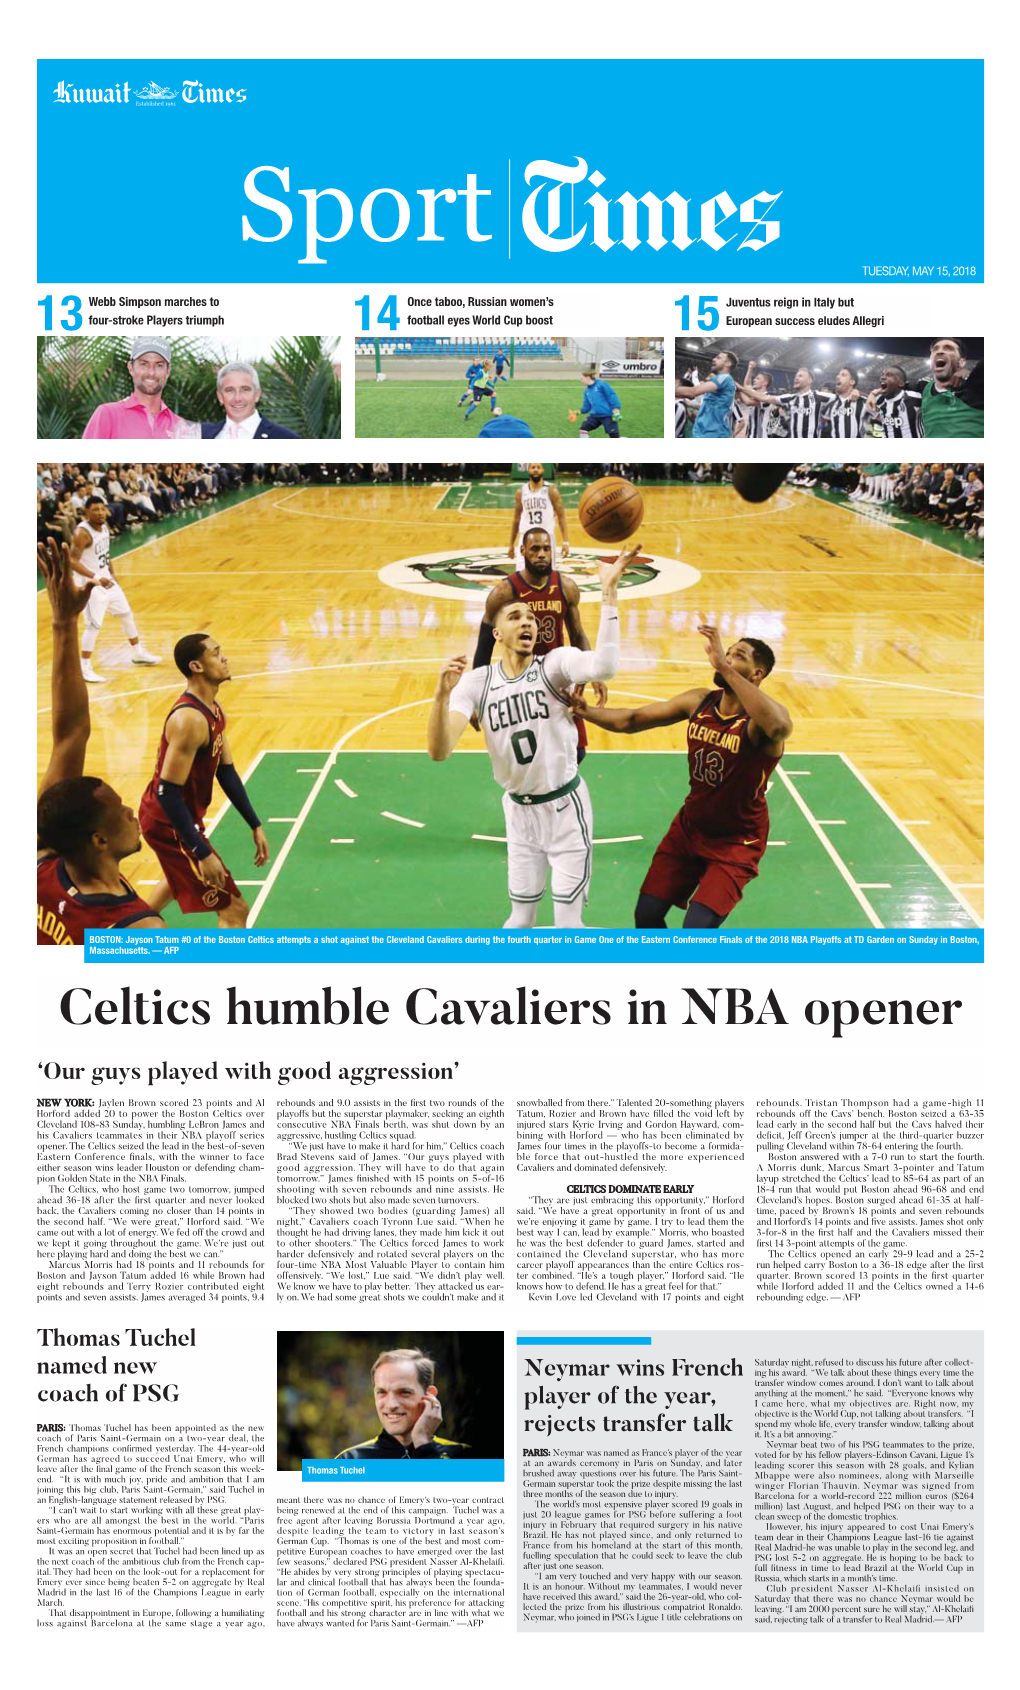 Celtics Humble Cavaliers in NBA Opener